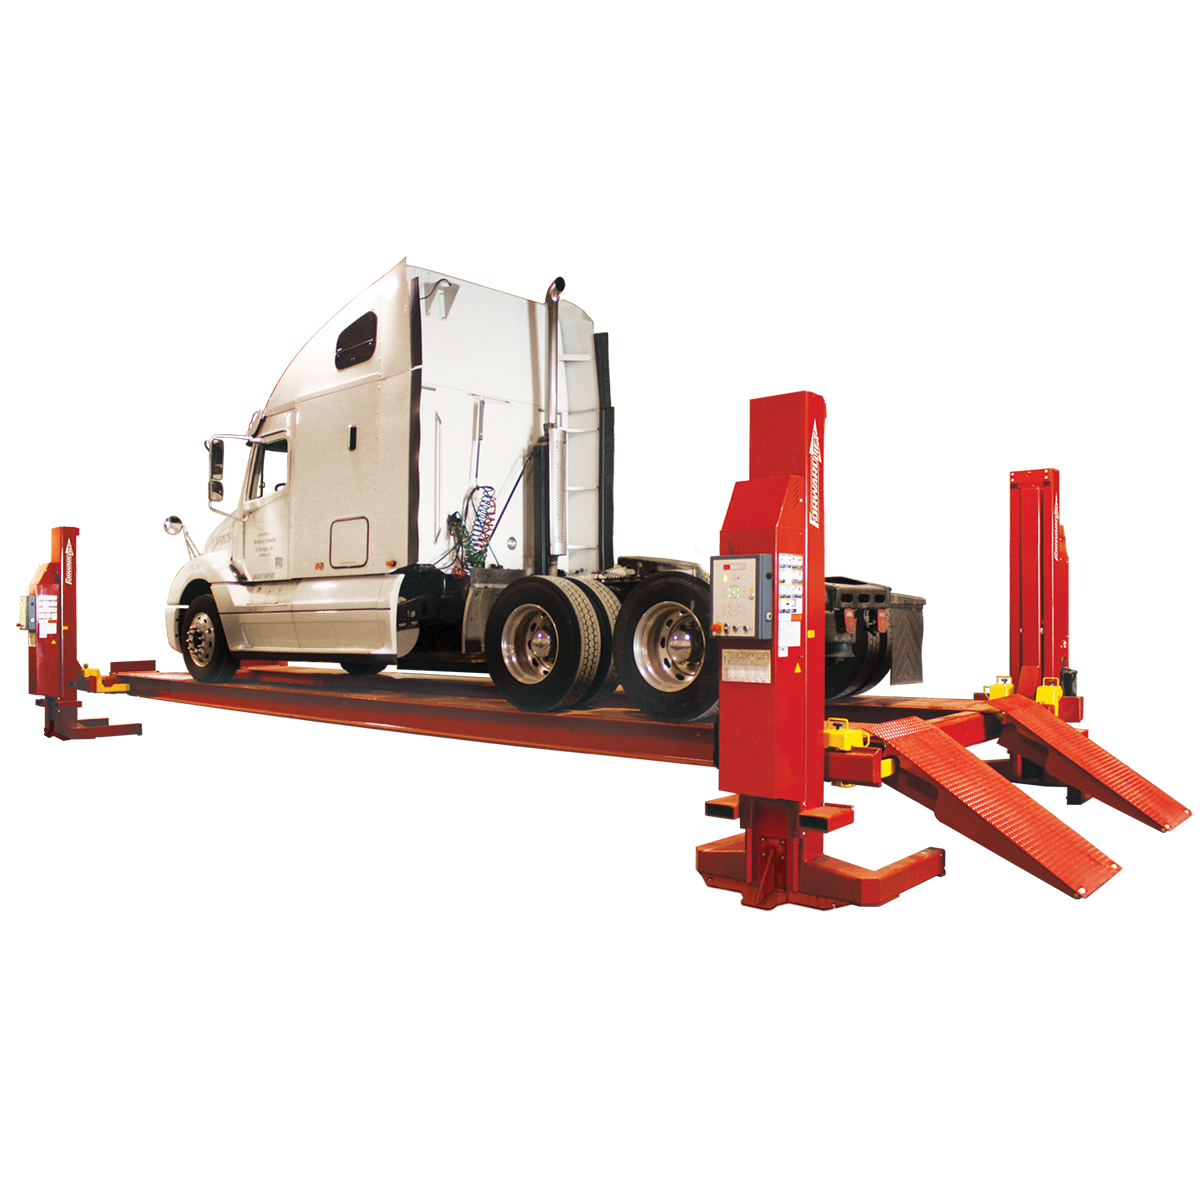 CR60MU001RD —  Heavy Duty Truck/RV lift, 4-Post, 396“ Wheel Base Max